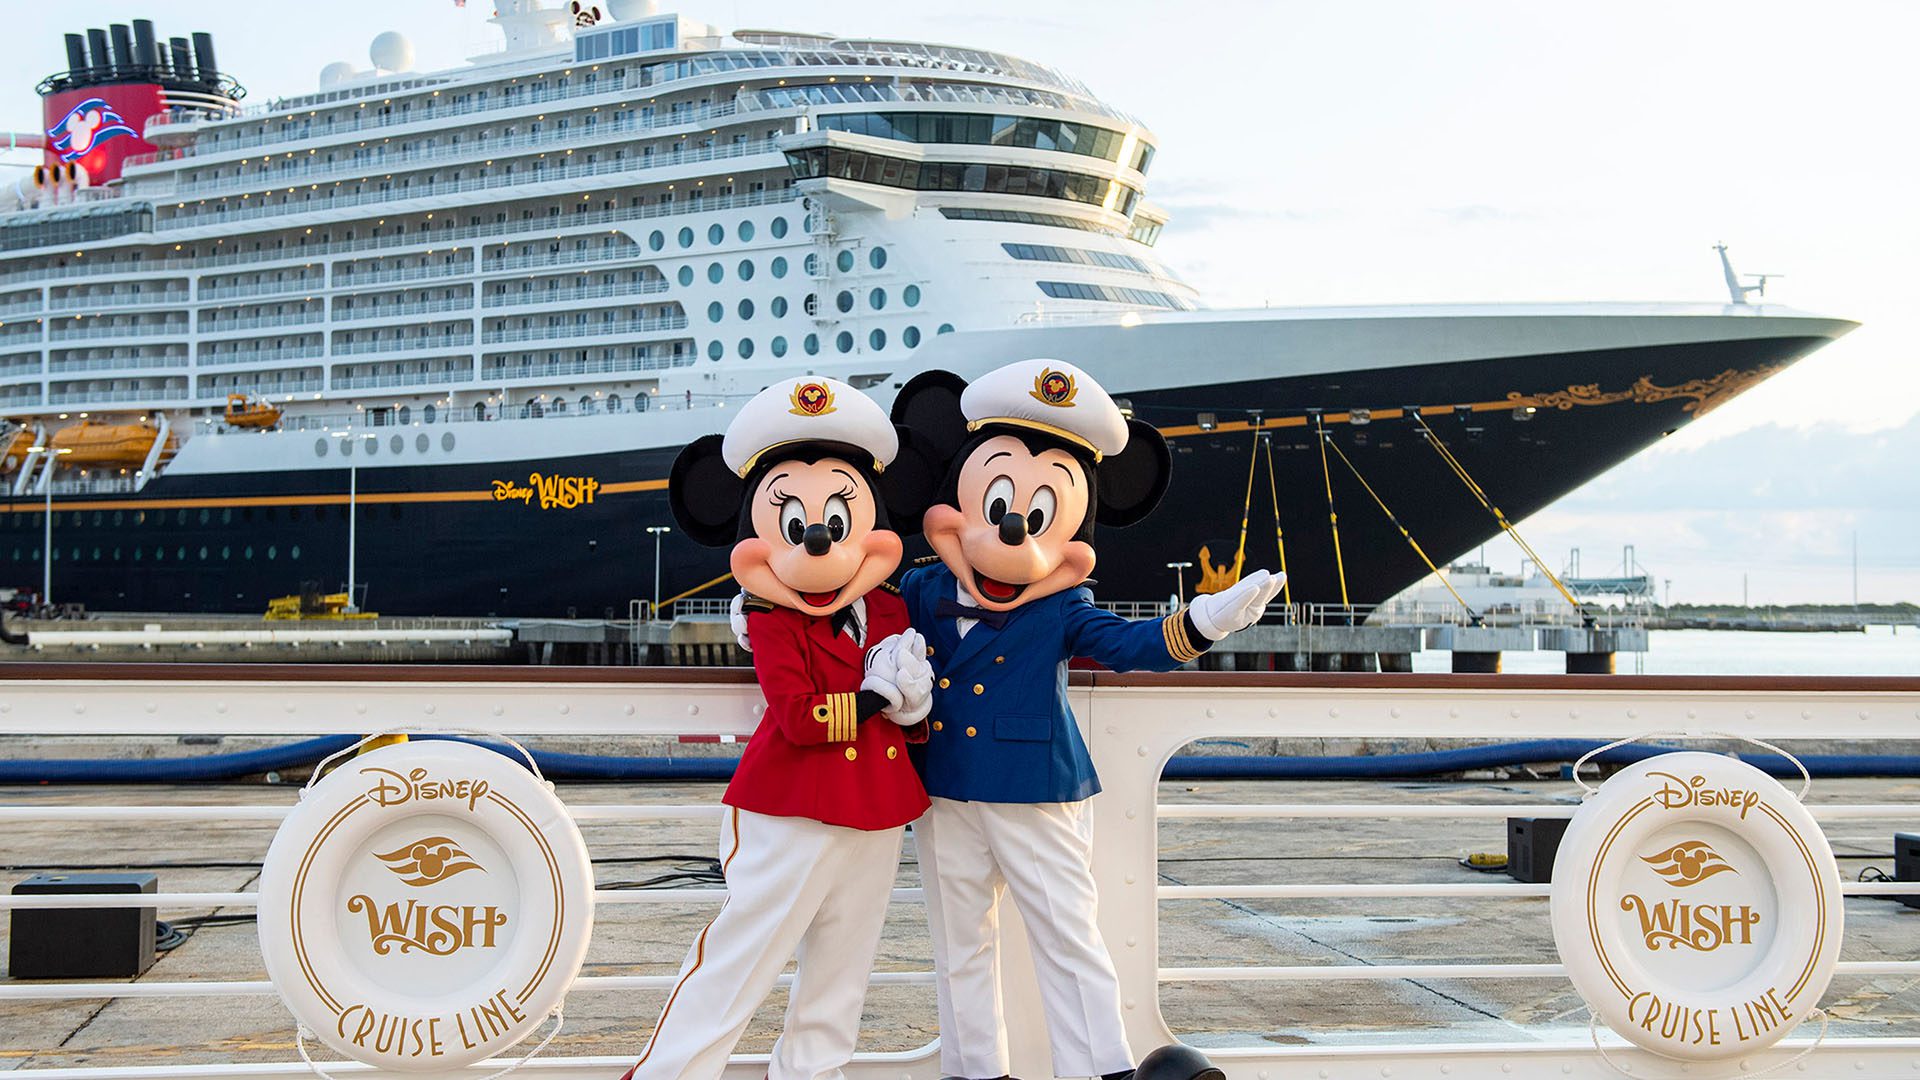 Newest, biggest, boldest Disney cruise ship yet, Disney Wish, sets sail